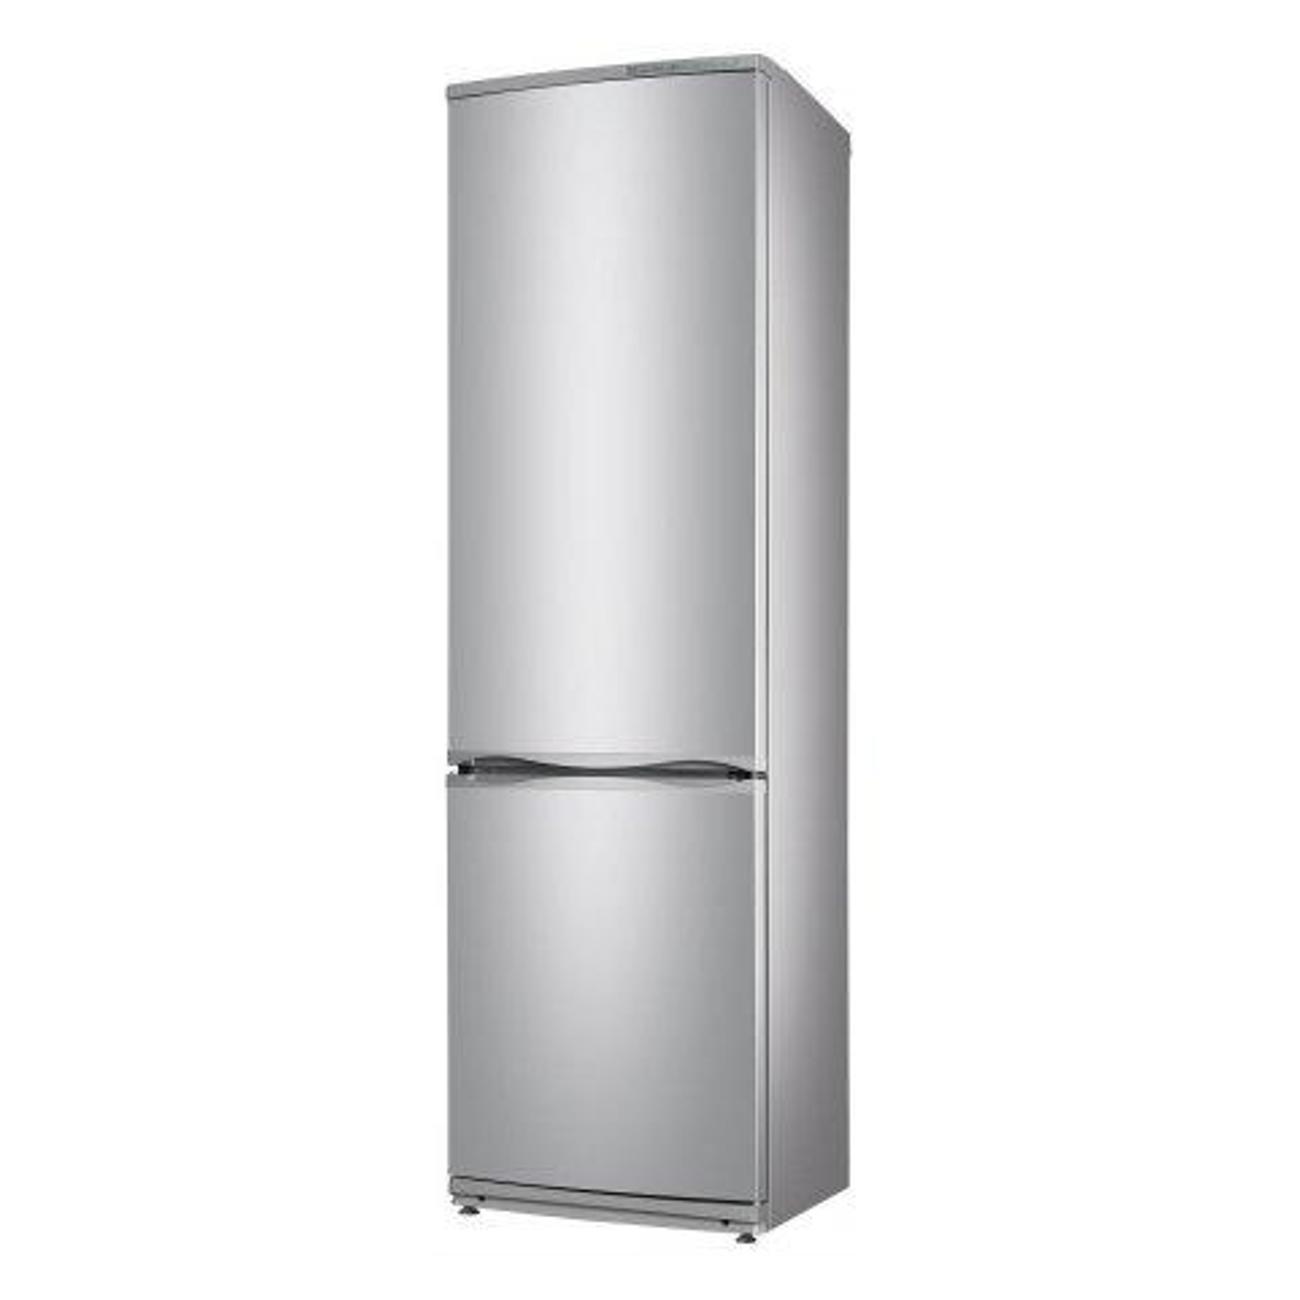 Холодильник атлант h. Холодильник Атлант хм 4625-141. Холодильник ATLANT хм 6025-060. Холодильник Атлант XM 6026-080. Холодильник Атлант хм 6021-080.